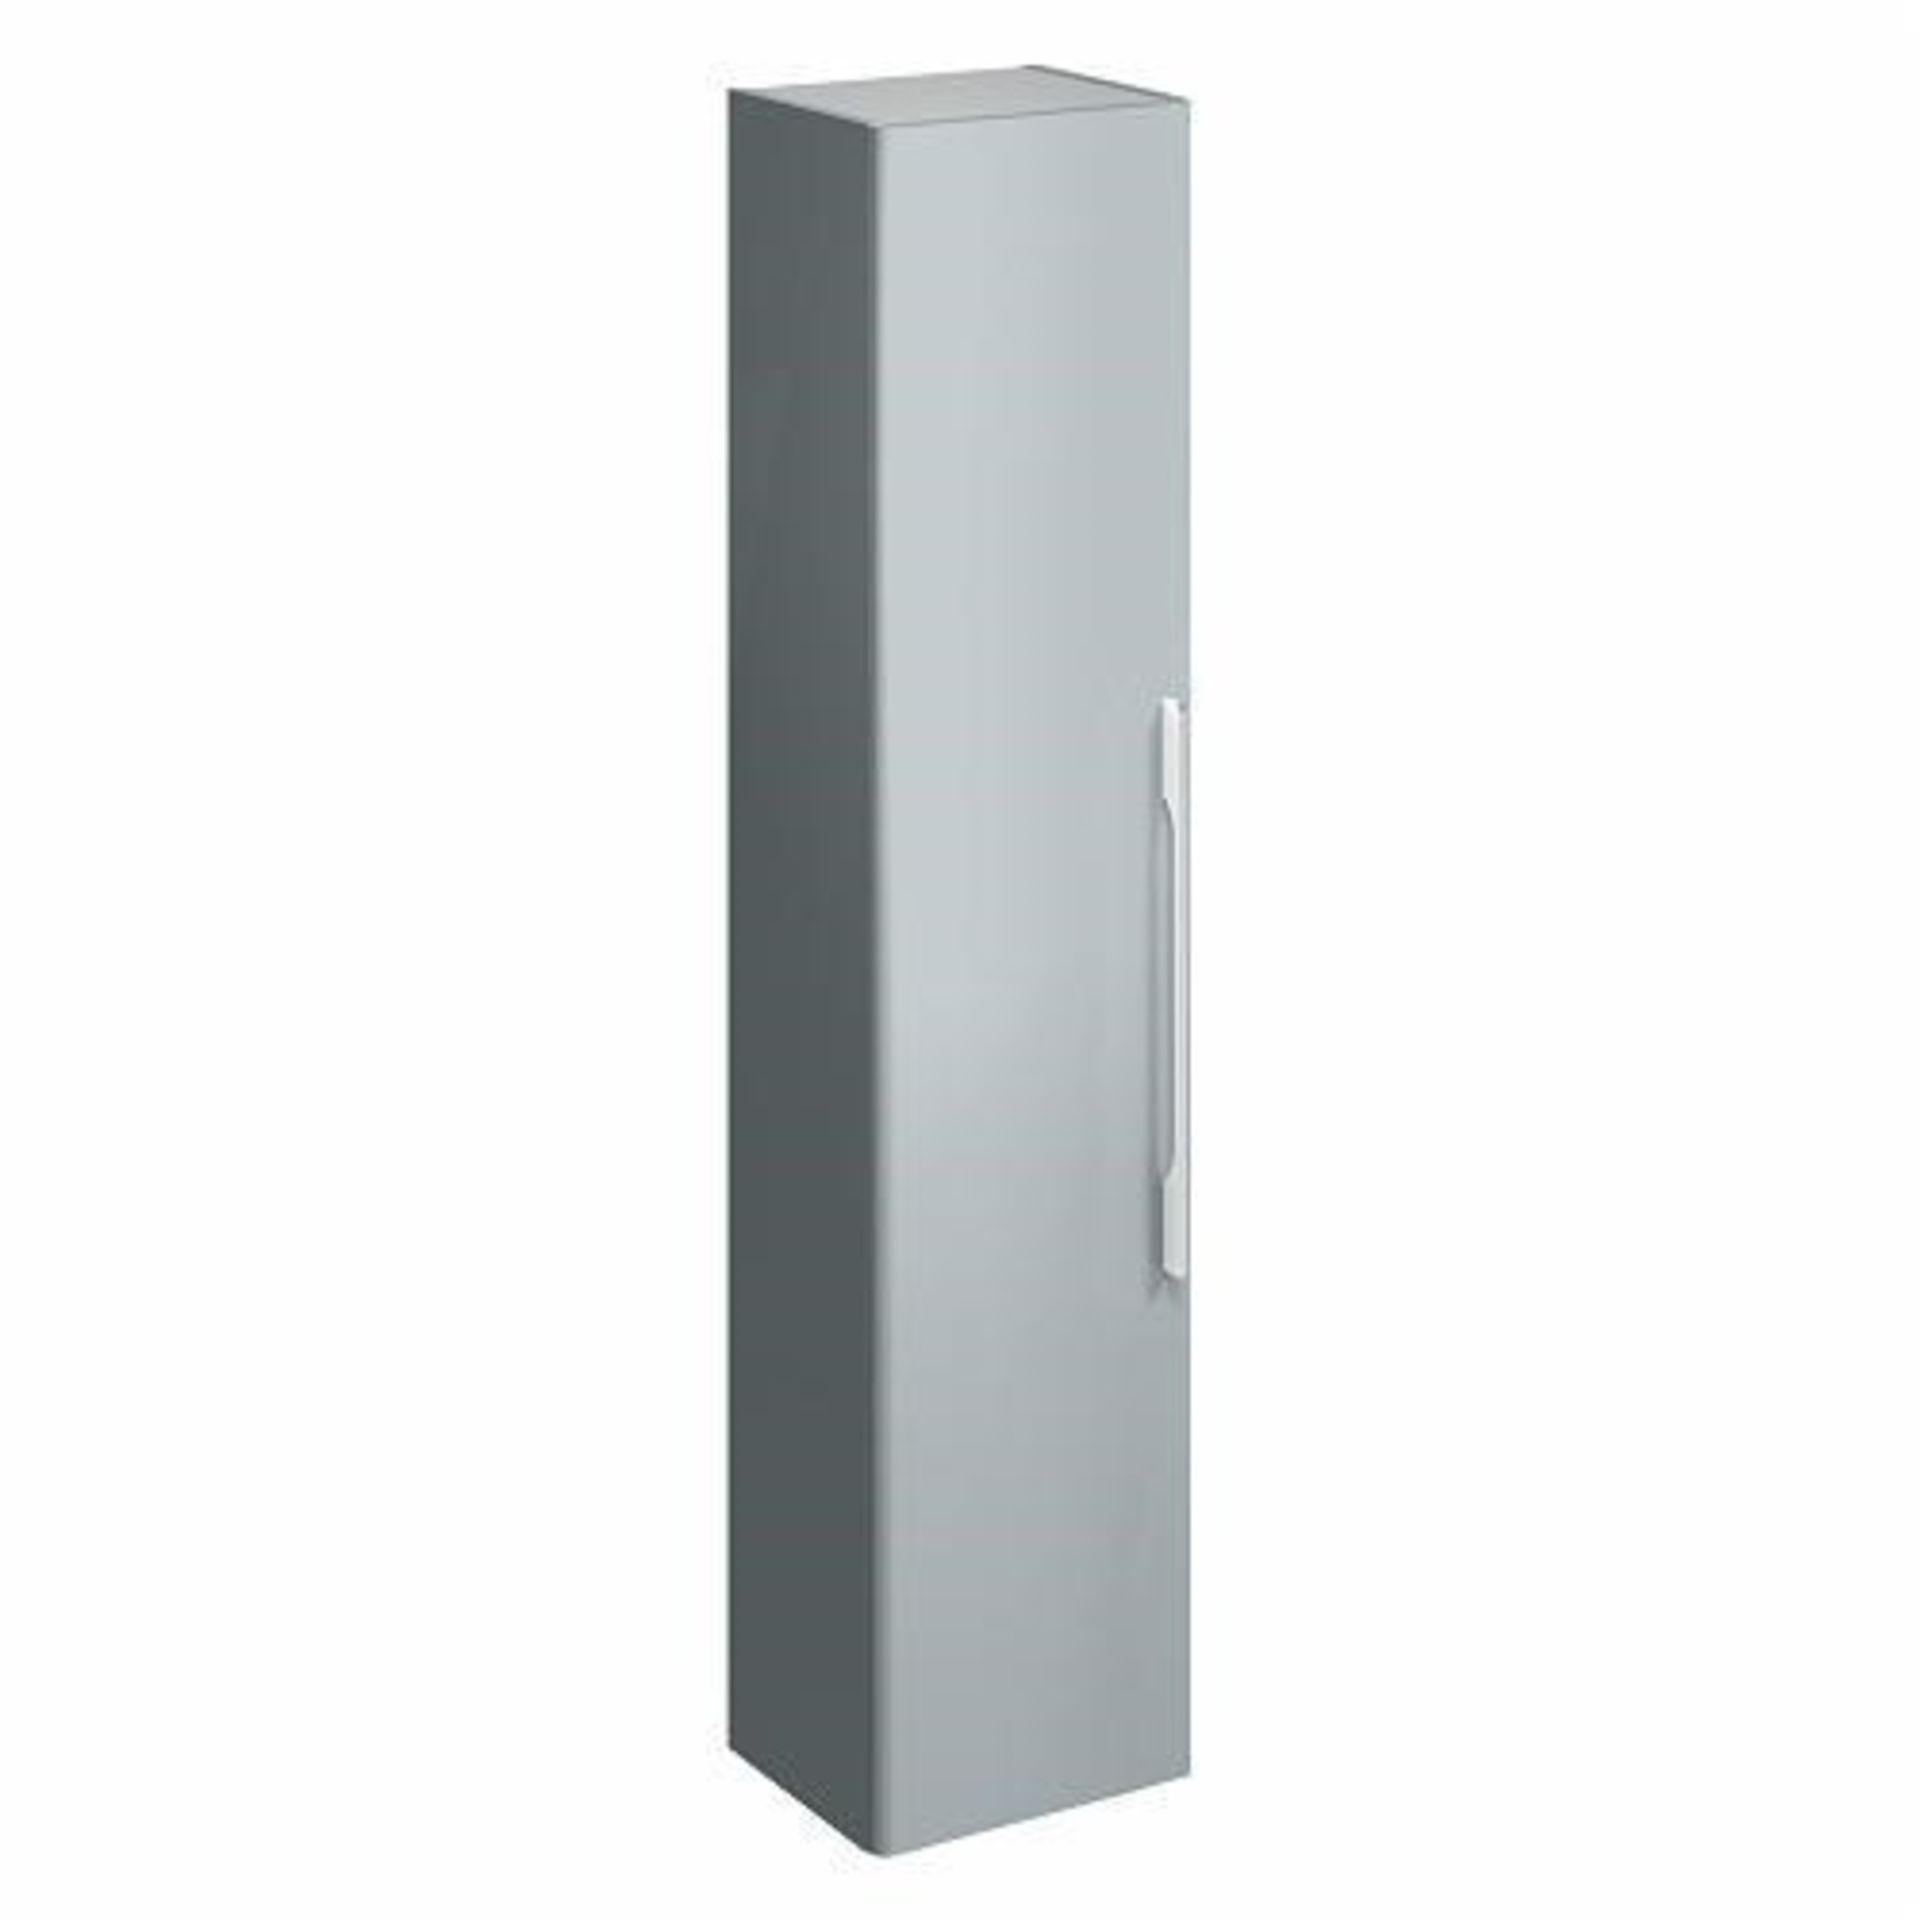 (WS32) Twyfords 1800mm Grey Tall Storage Unit. RRP £864.99.One door with soft closing mechani...